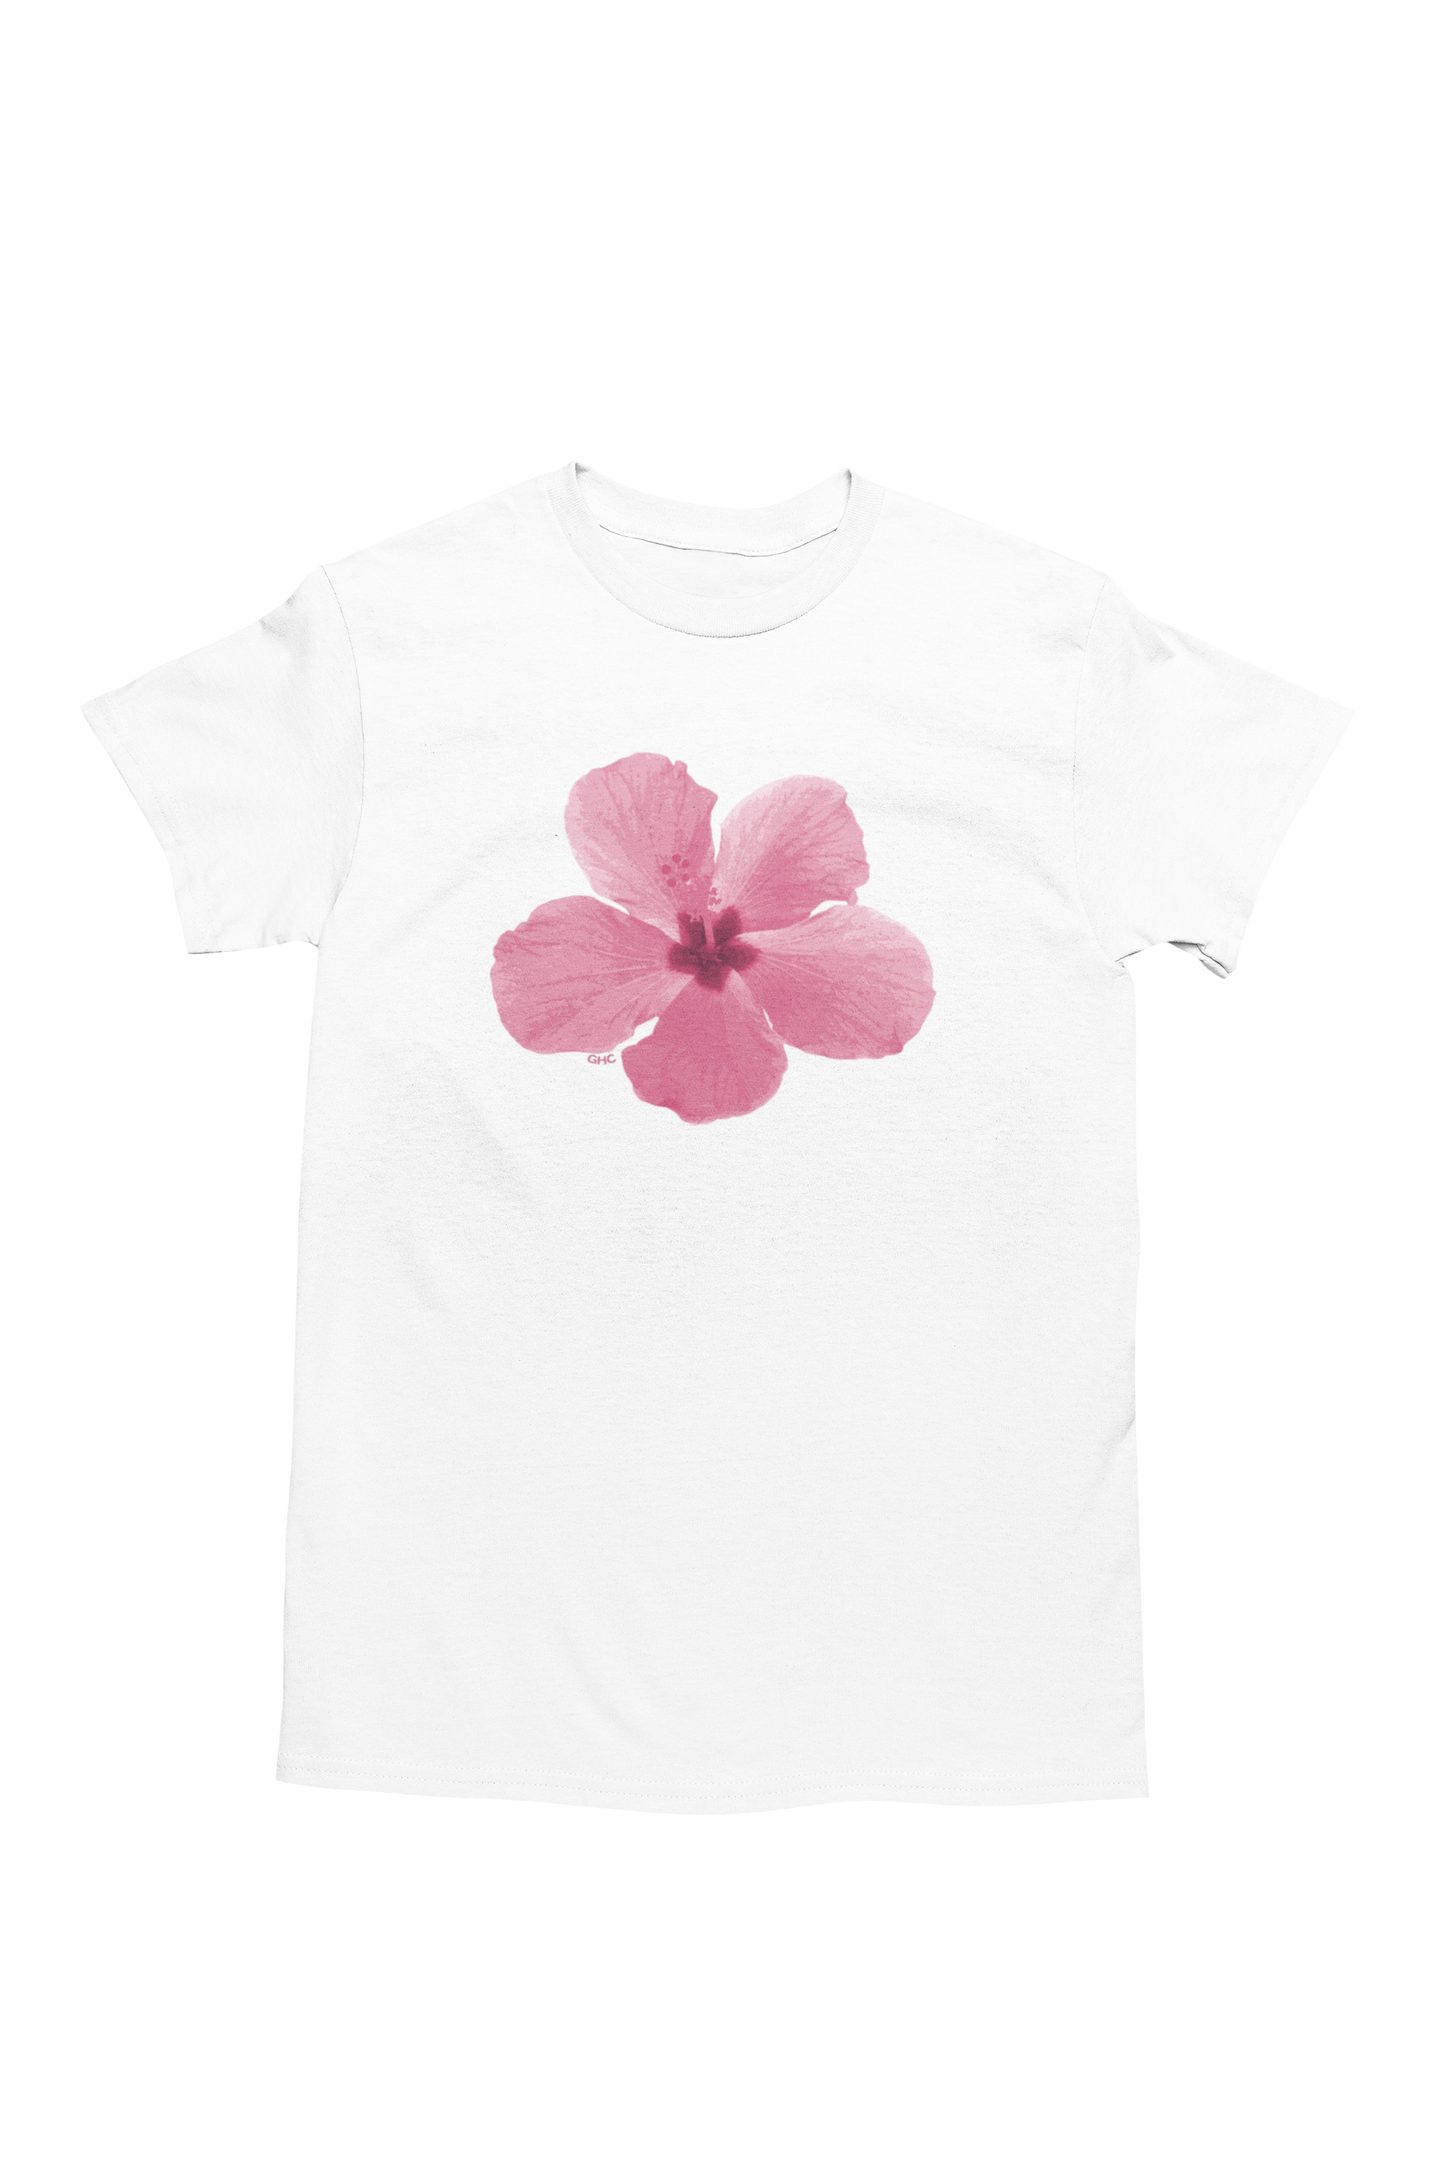 Good Hearts Club - Pink Hibiscus Tee Shirt